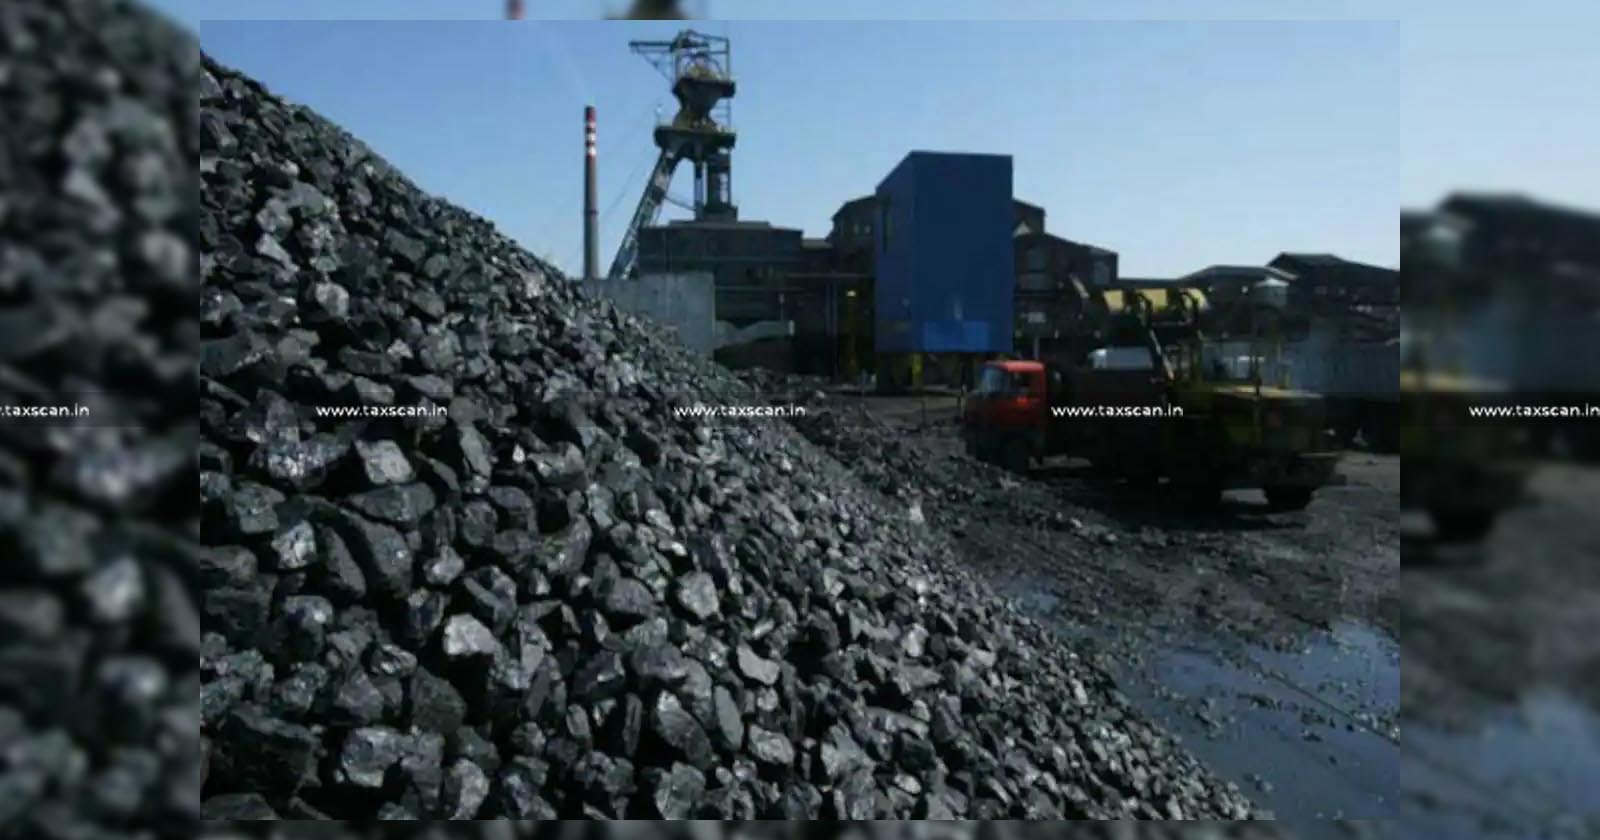 GST - Coal - middleman - ITAT - TAXSCAN